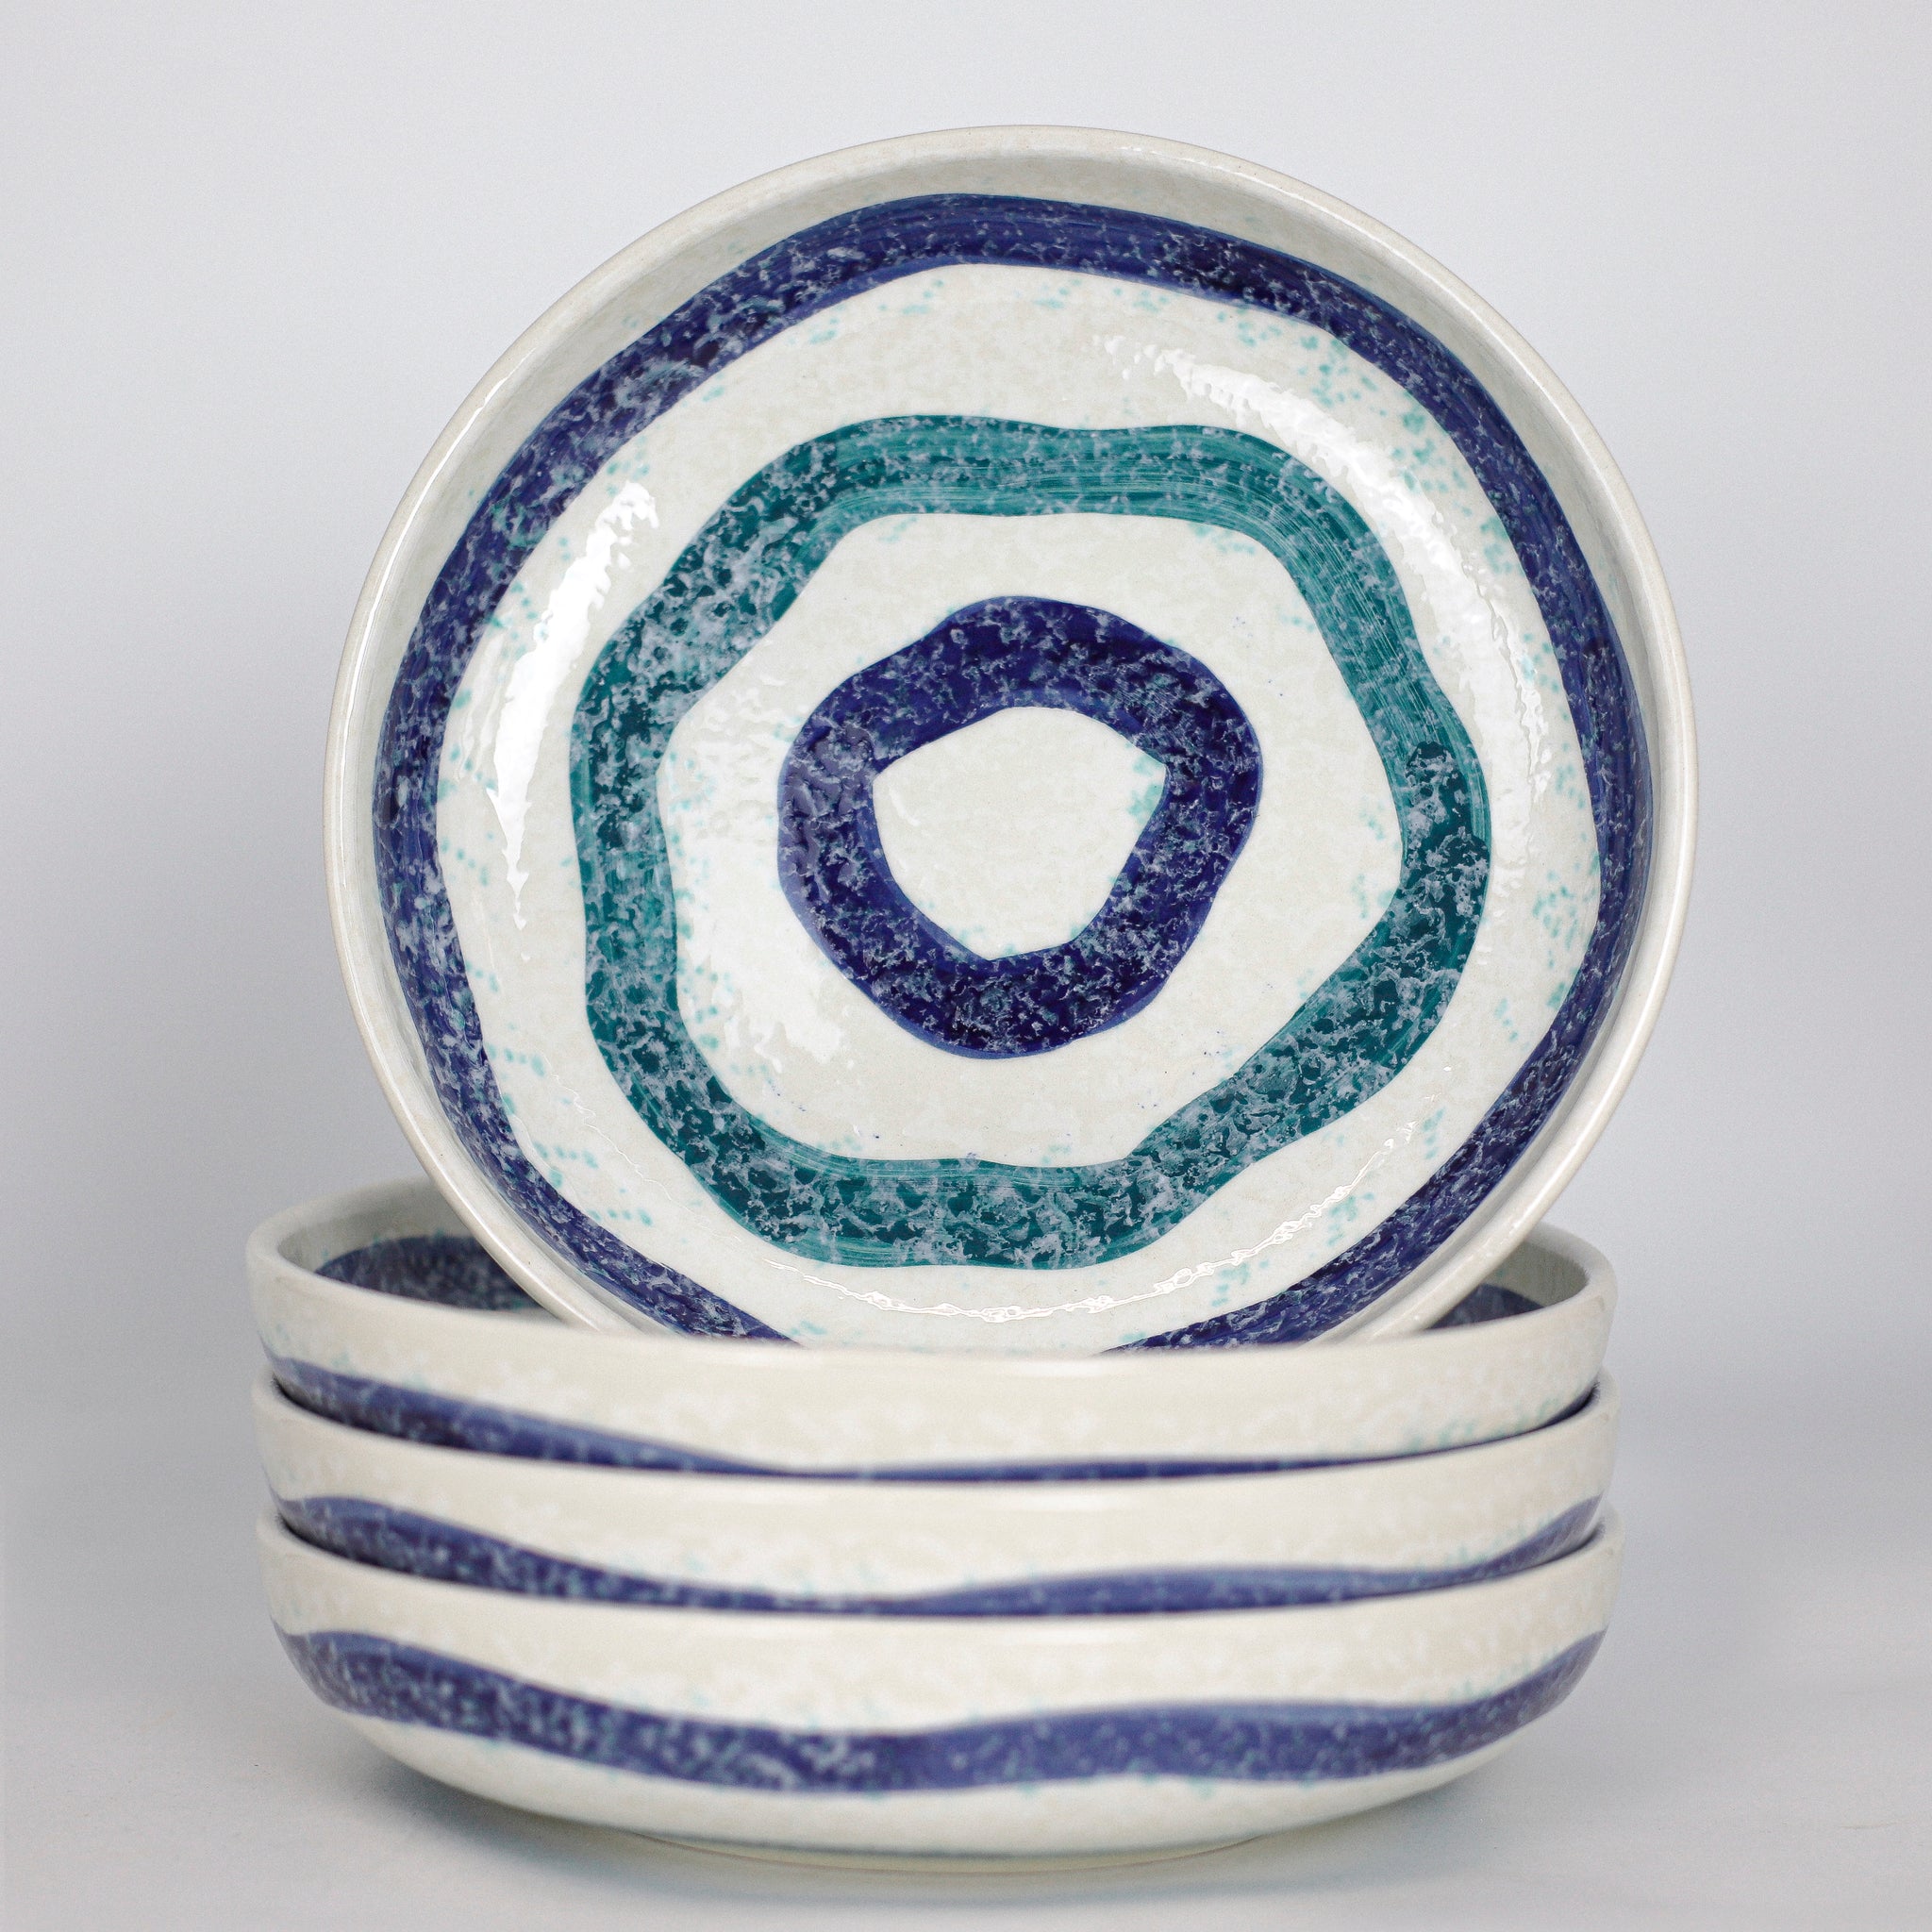 Menorca 4 Piece Meal Bowl Set - Blue and Turquoise Stripe - Euro Ceramica 